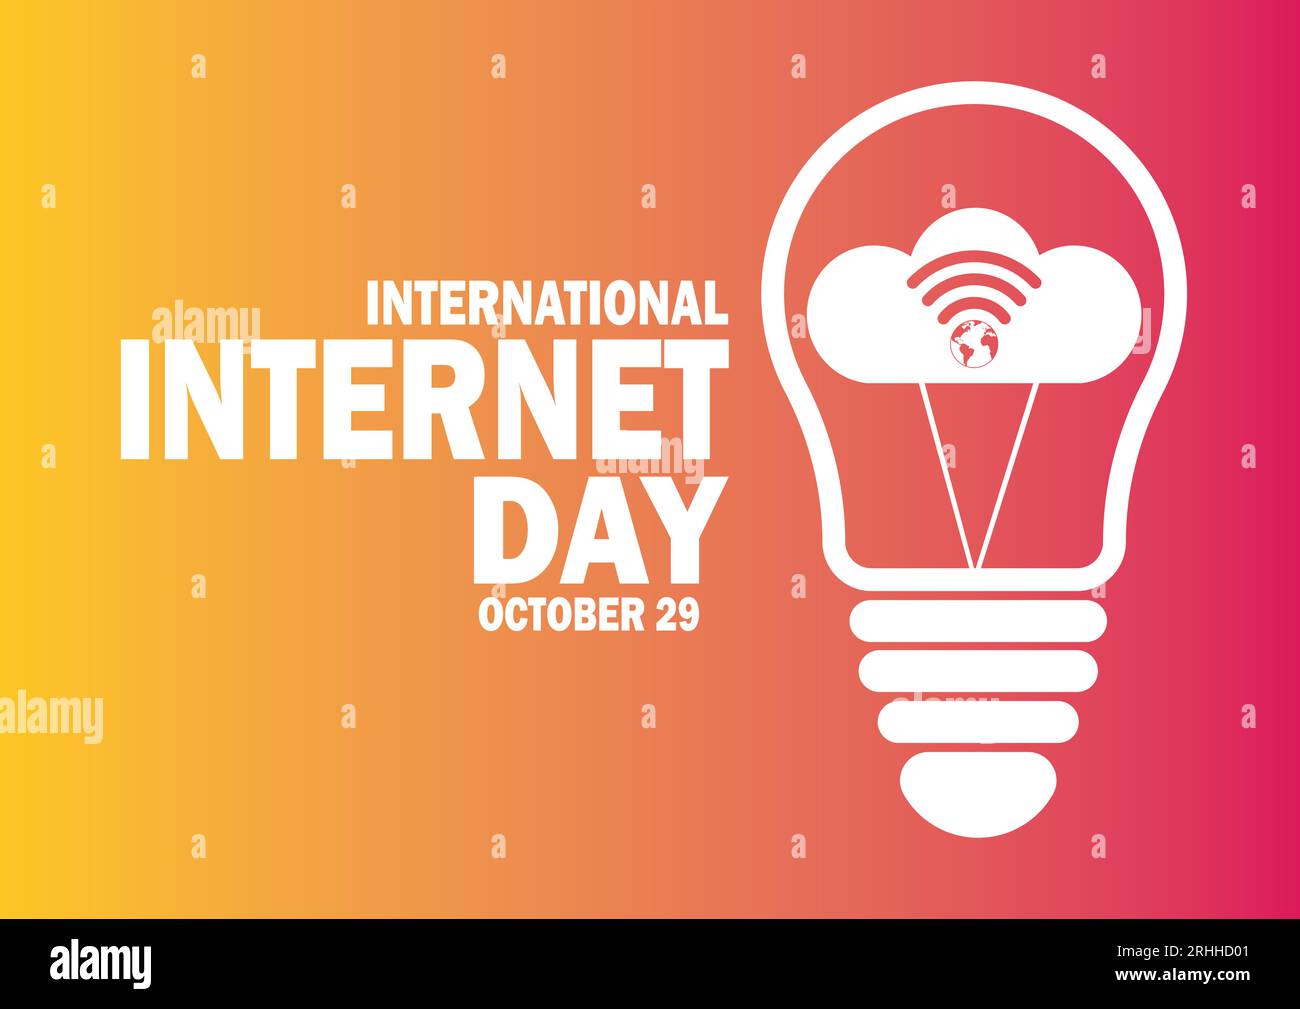 International Internet Day Vector illustration concept background. October 29. Internet concept. Template for background, banner, card, poster Stock Vector